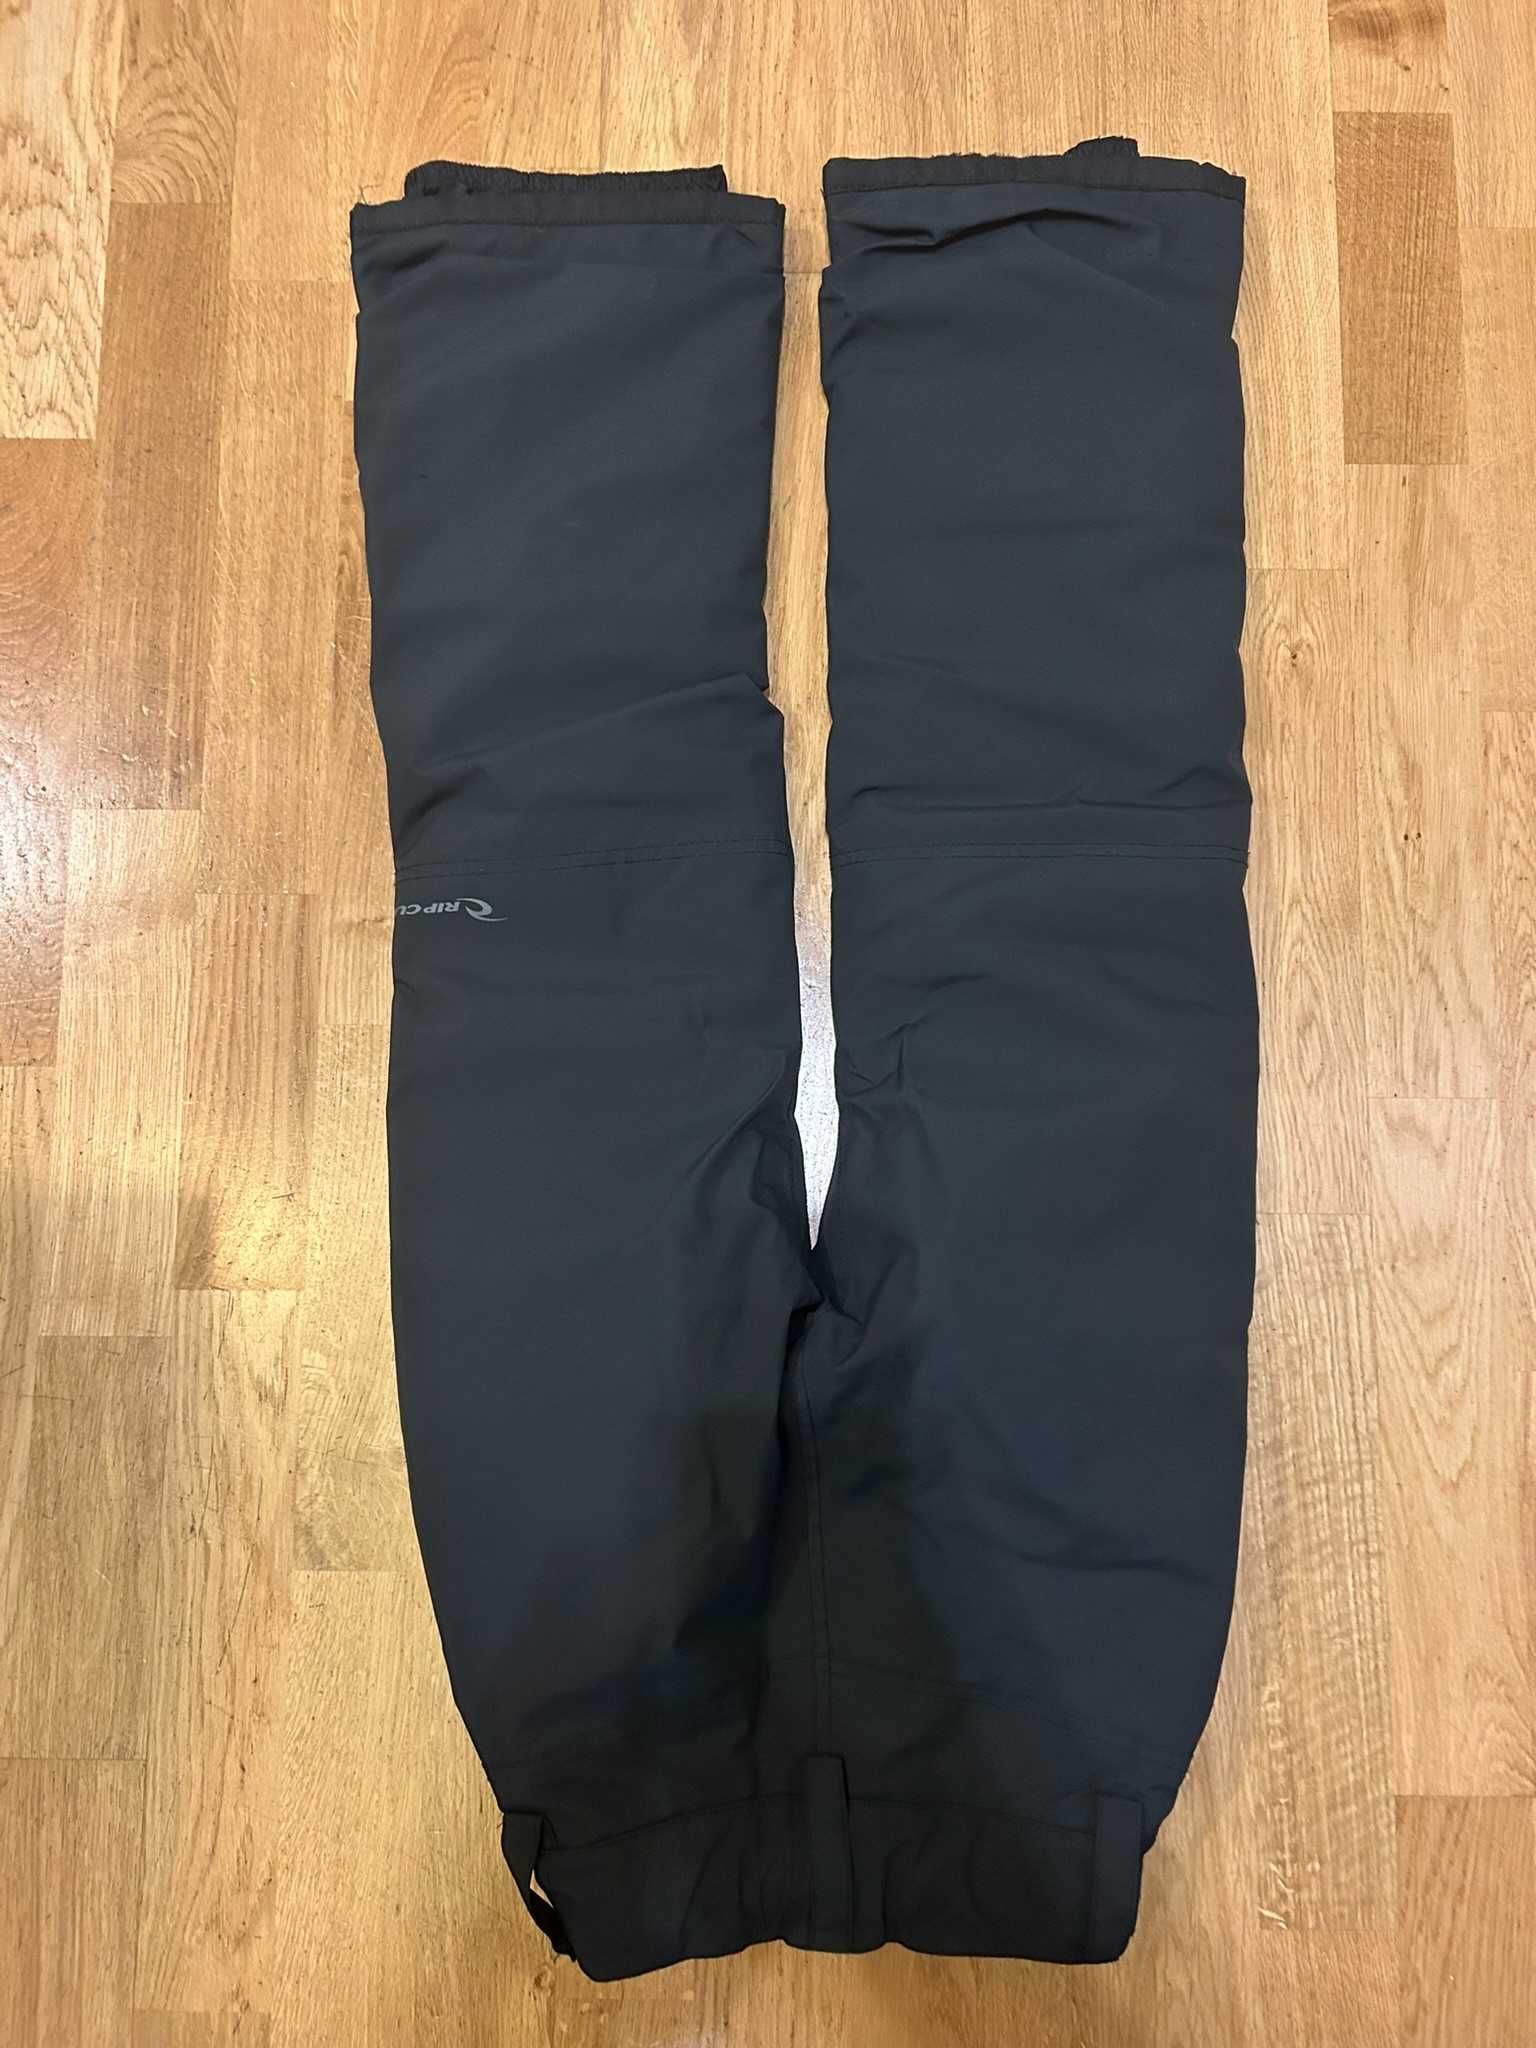 Spodnie narciarskie dla dziecka Rip Curl Olly (rozmiar 10 - ok 140cm)